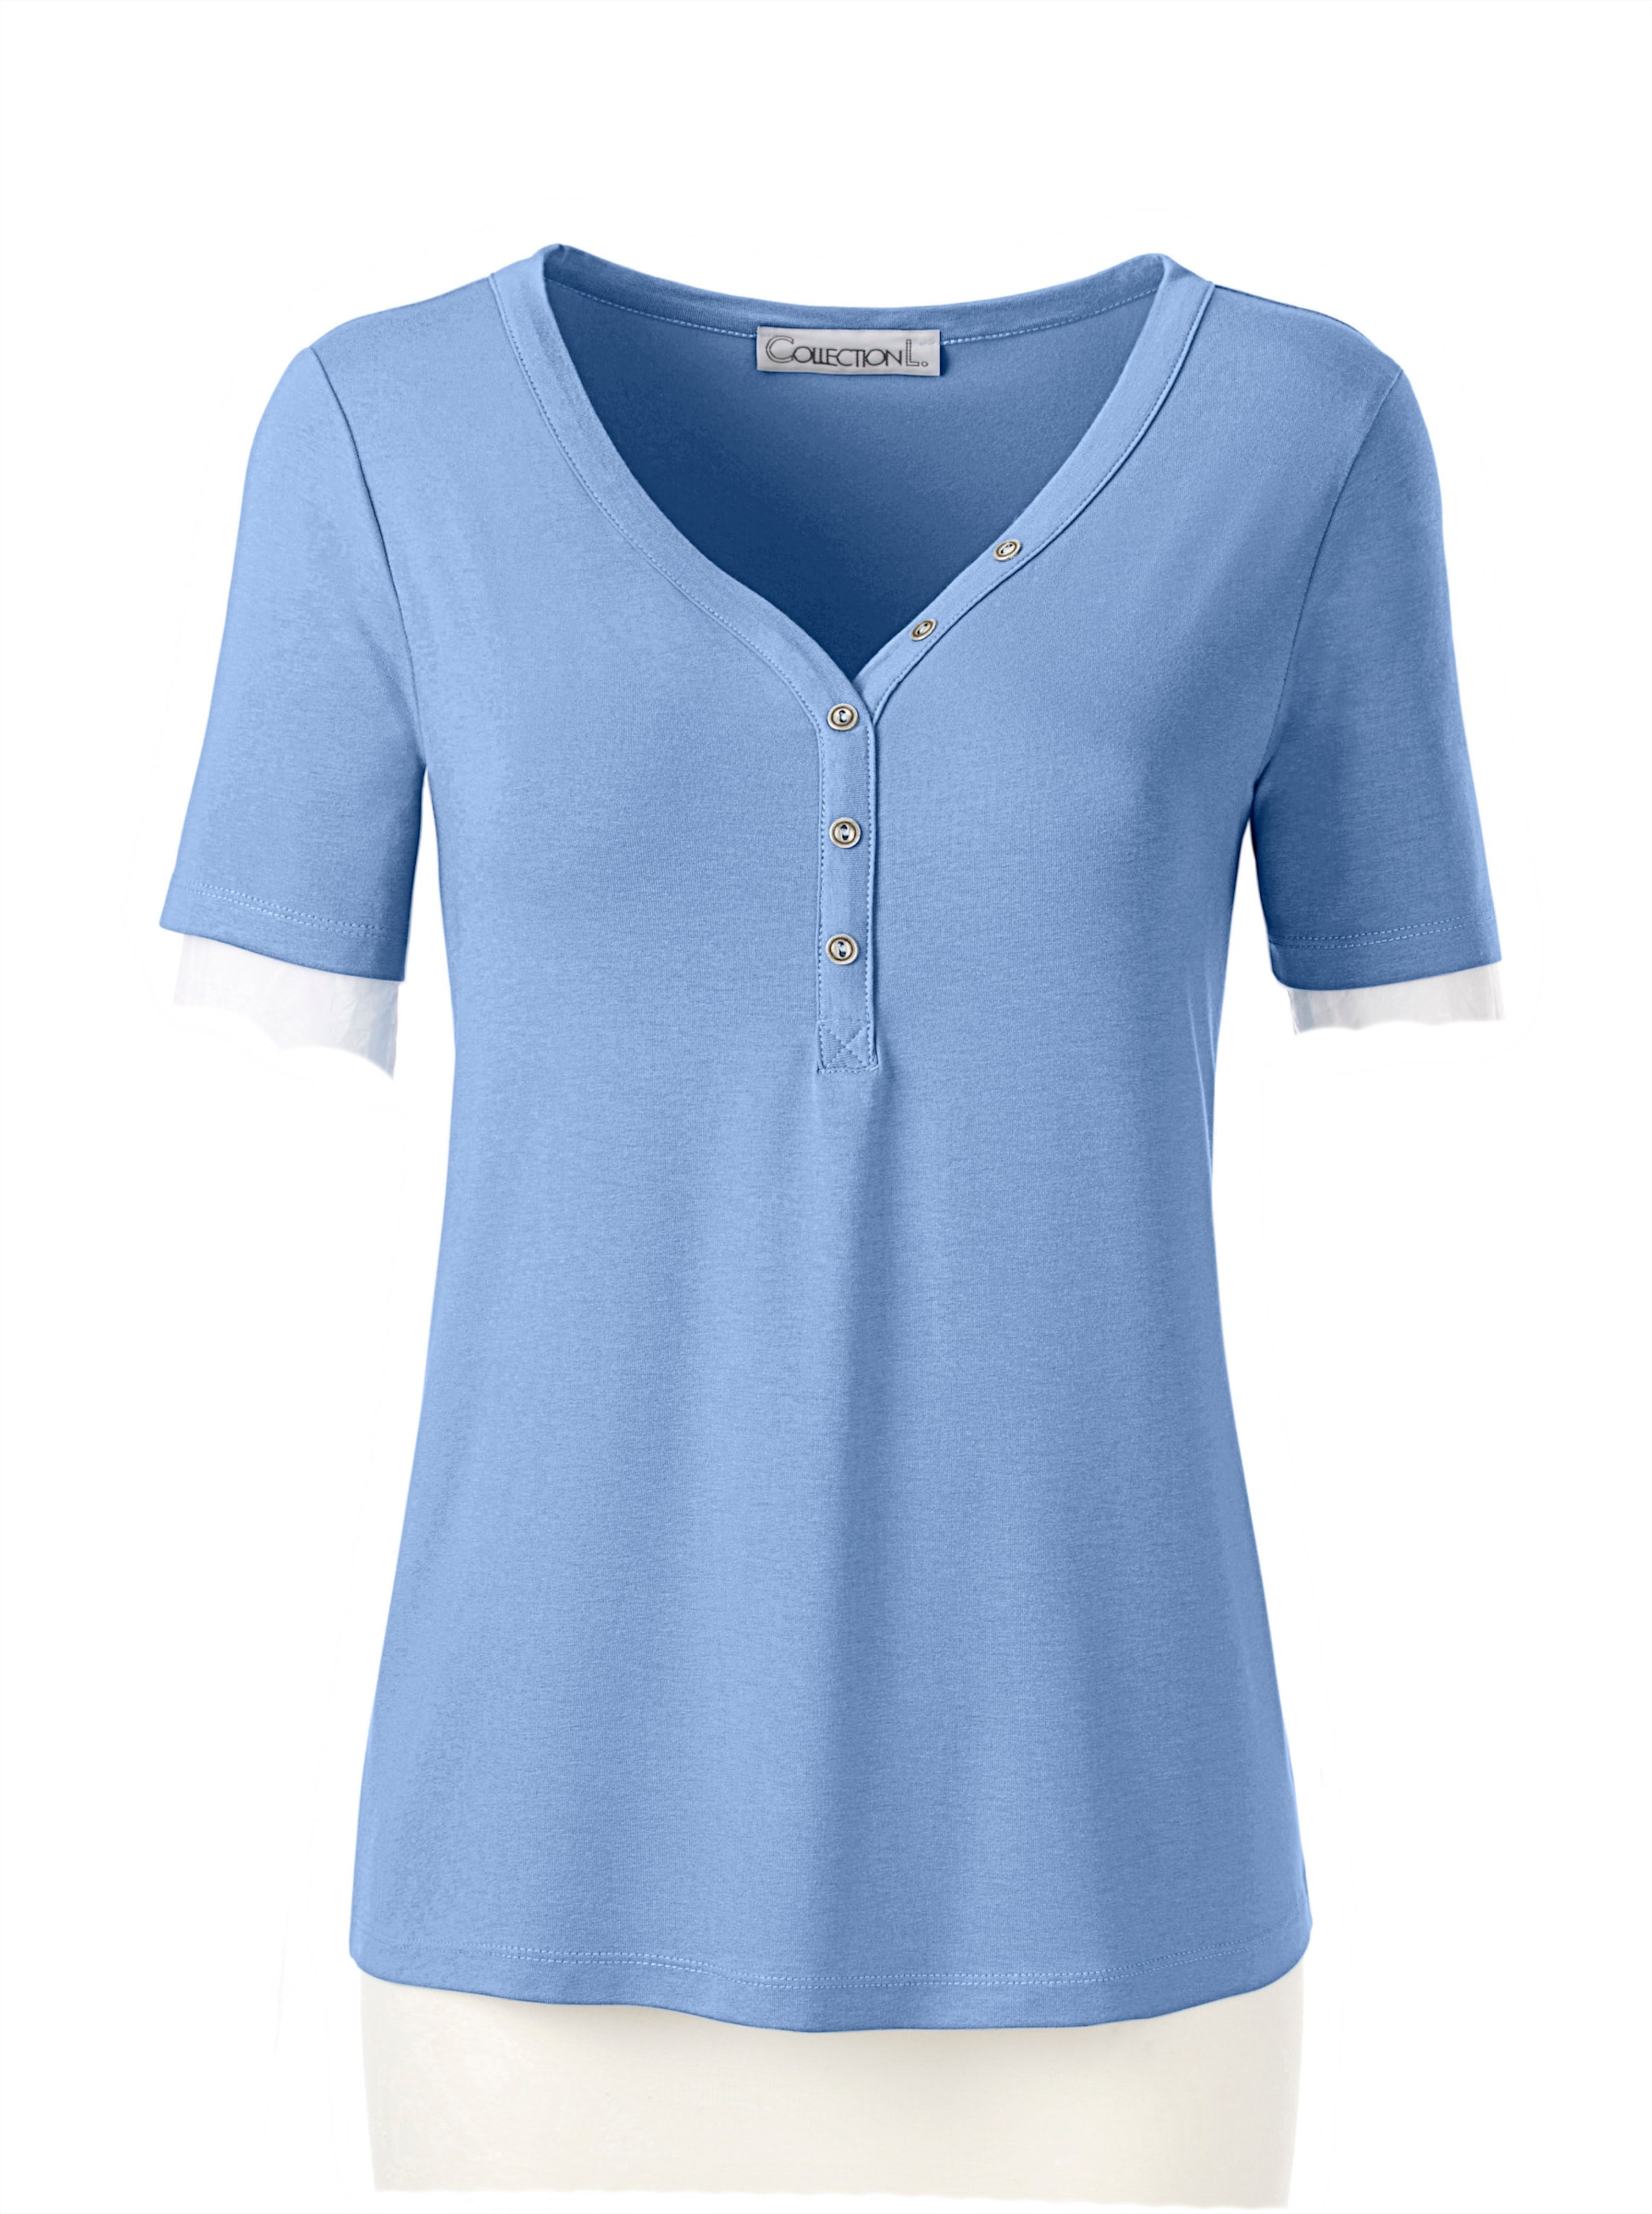 Herz aus günstig Kaufen-Kurzarmshirt in bleu von heine. Kurzarmshirt in bleu von heine <![CDATA[Softweiches Basic! Shirt mit Knöpfchenverzierung am herzförmigen Ausschnitt.]]>. 